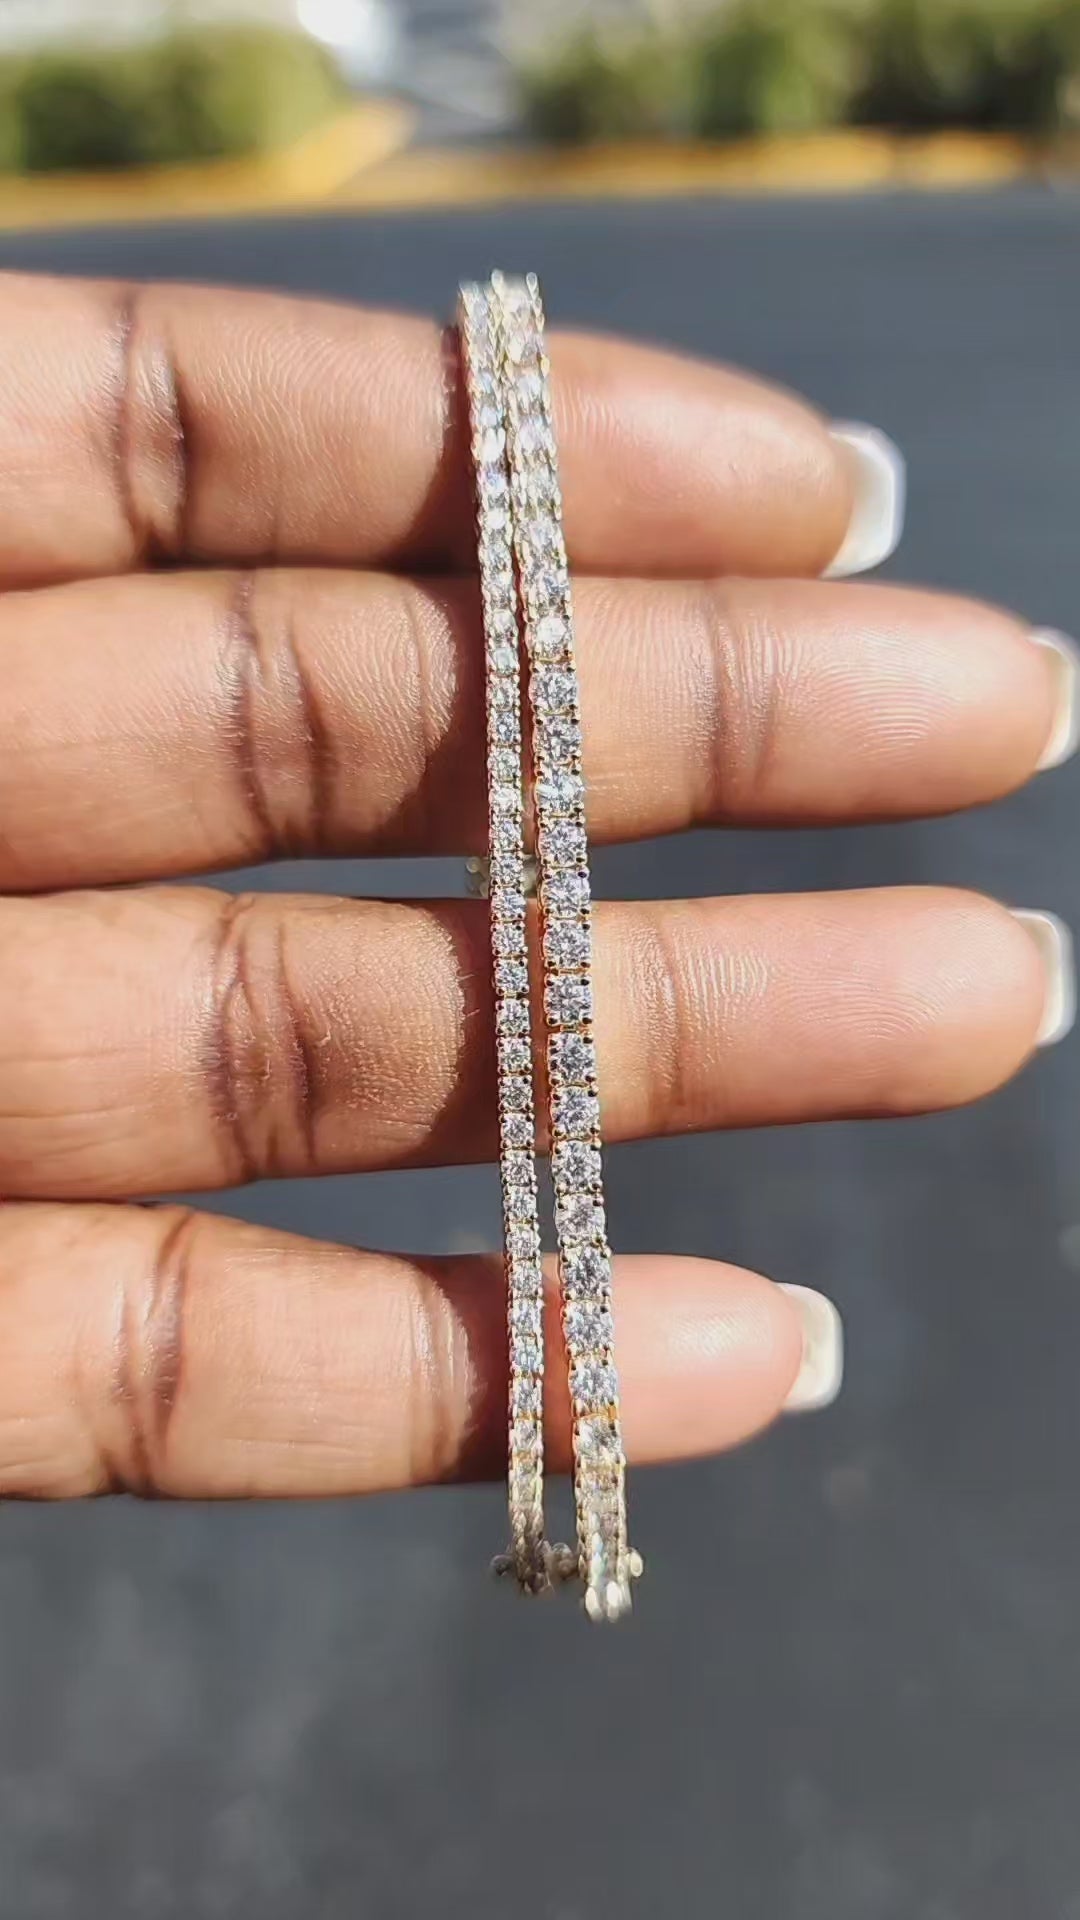 Personalized Capri Floating Diamond Bracelet- 14k Solid Gold - Oak